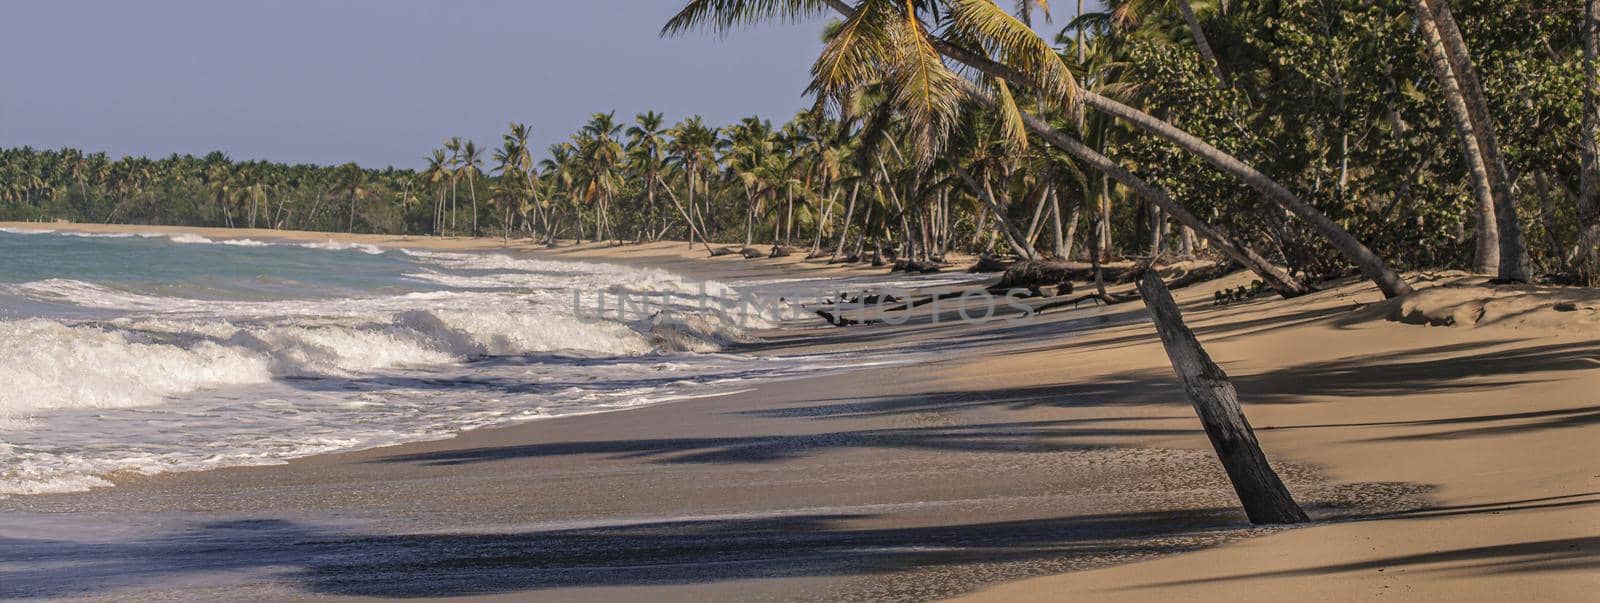 Caribbean beach palm trees banner by pippocarlot